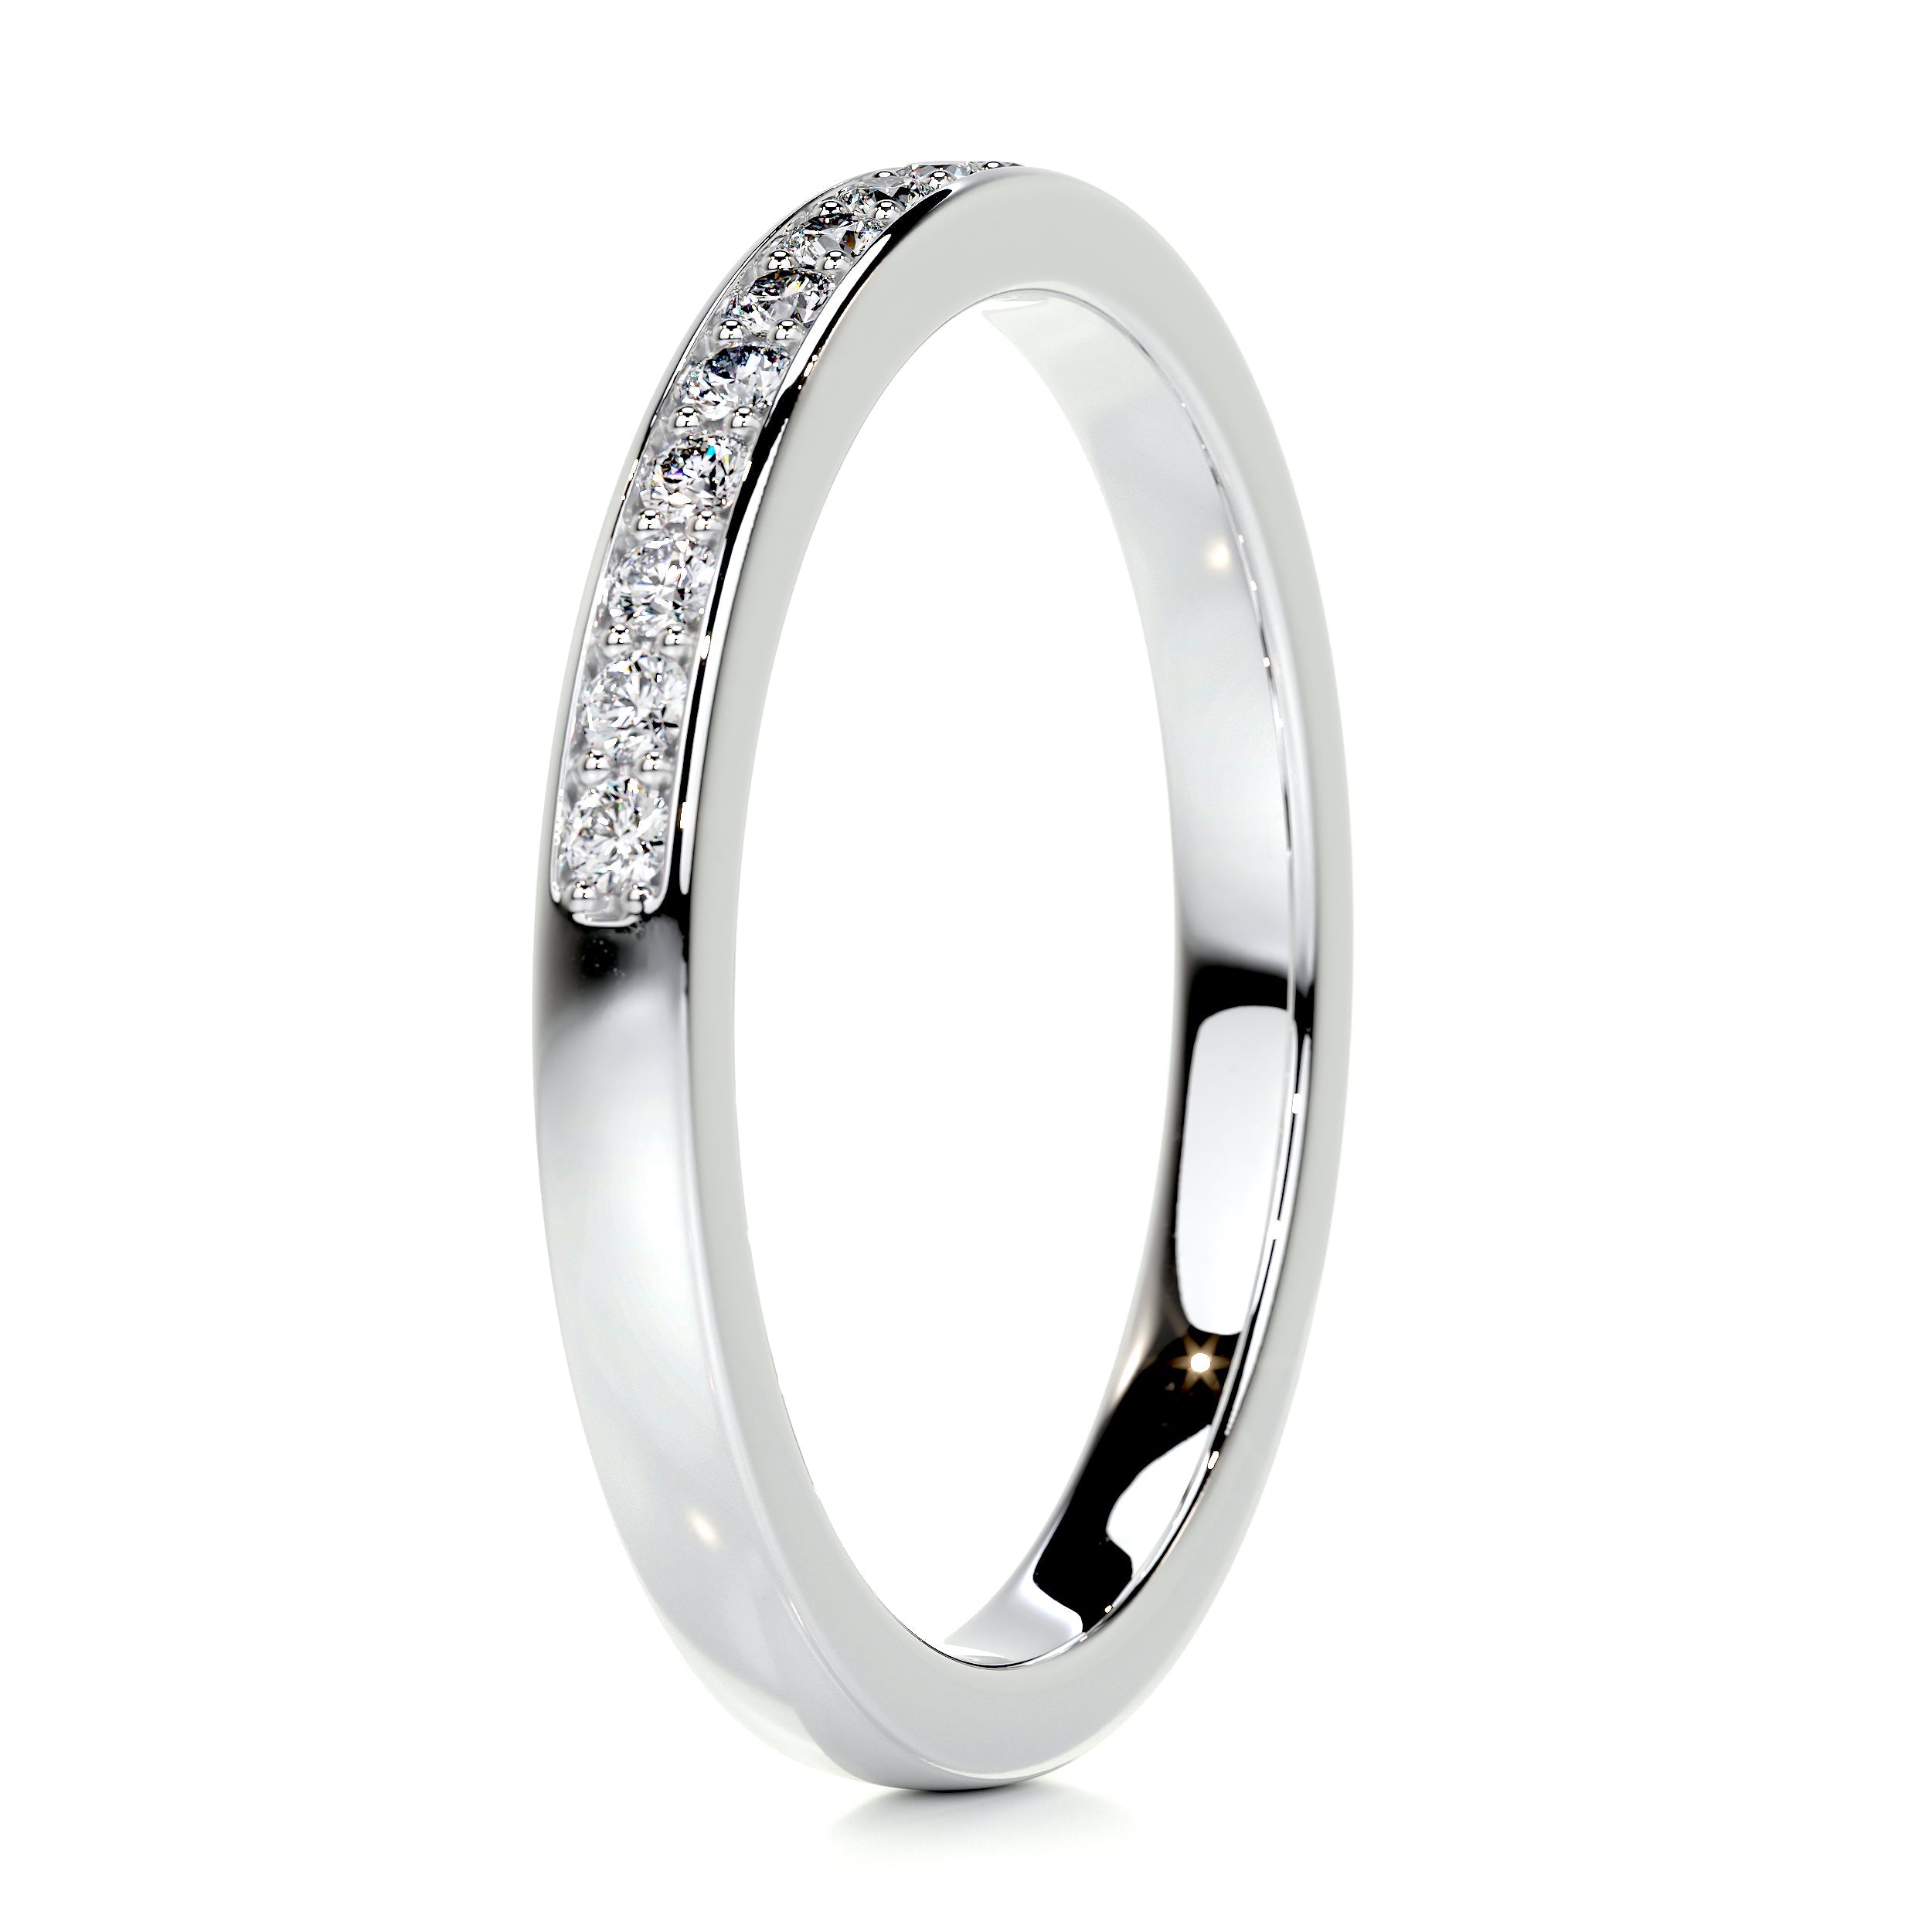 Giselle Diamond Wedding Ring   (0.2 Carat) -14K White Gold (RTS)